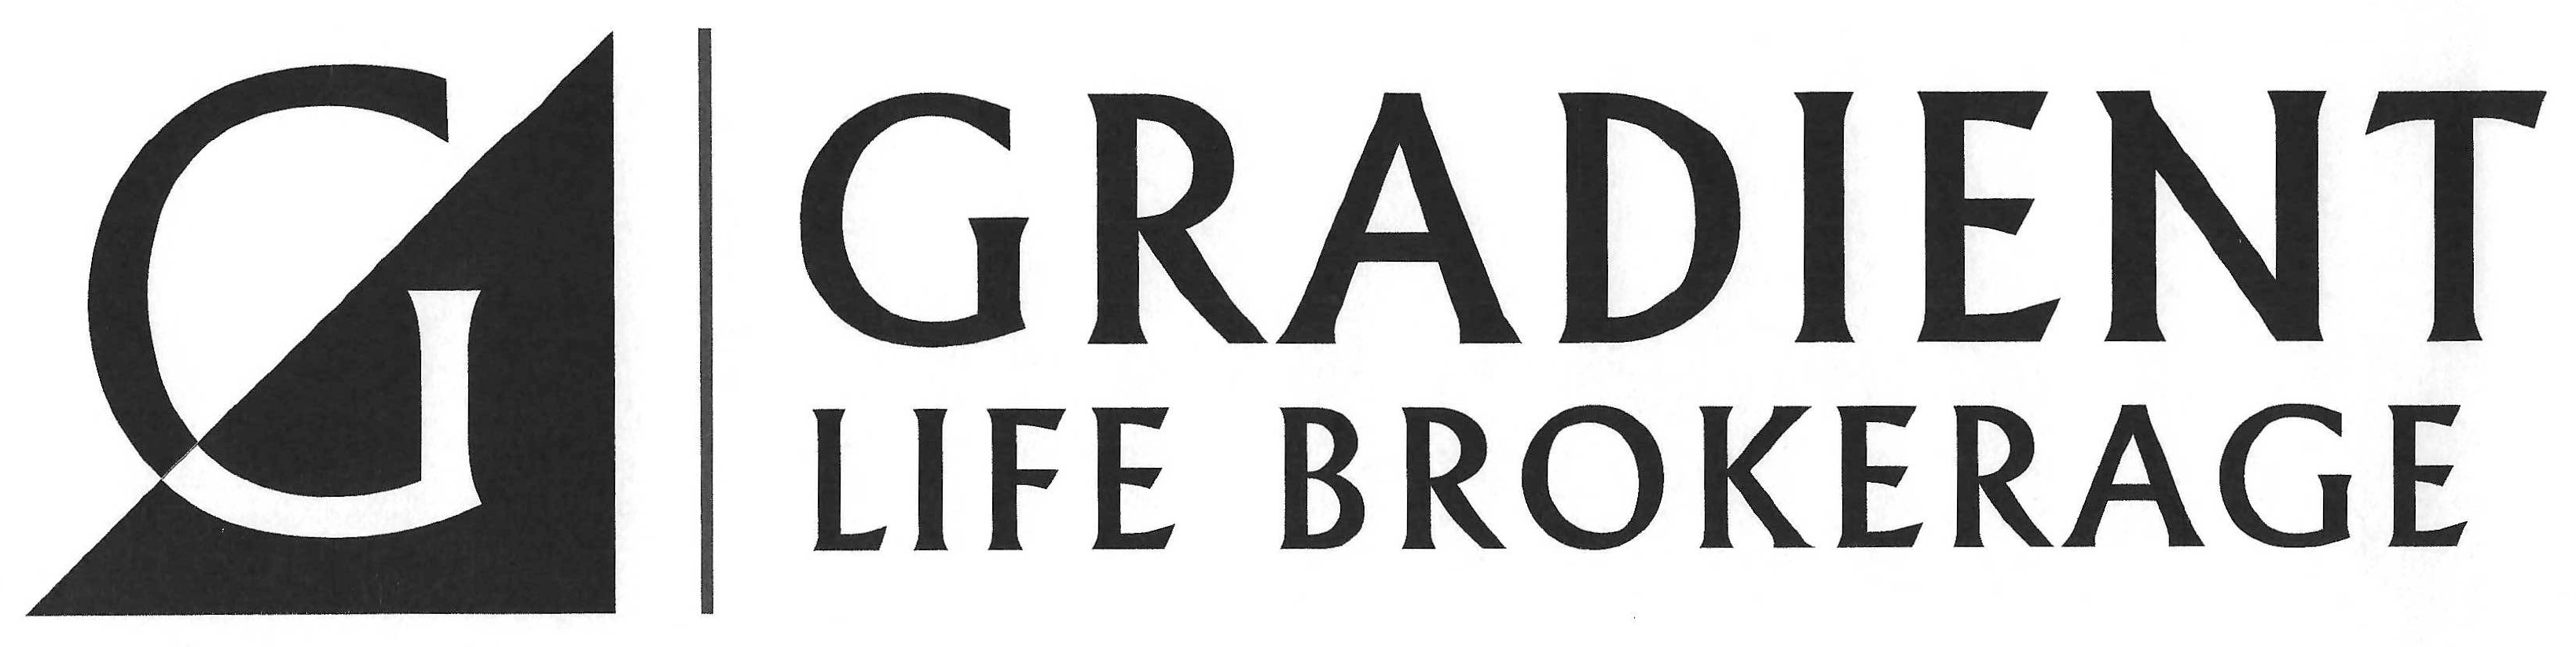 123 - Gradient Insurance Brokerage, LLC